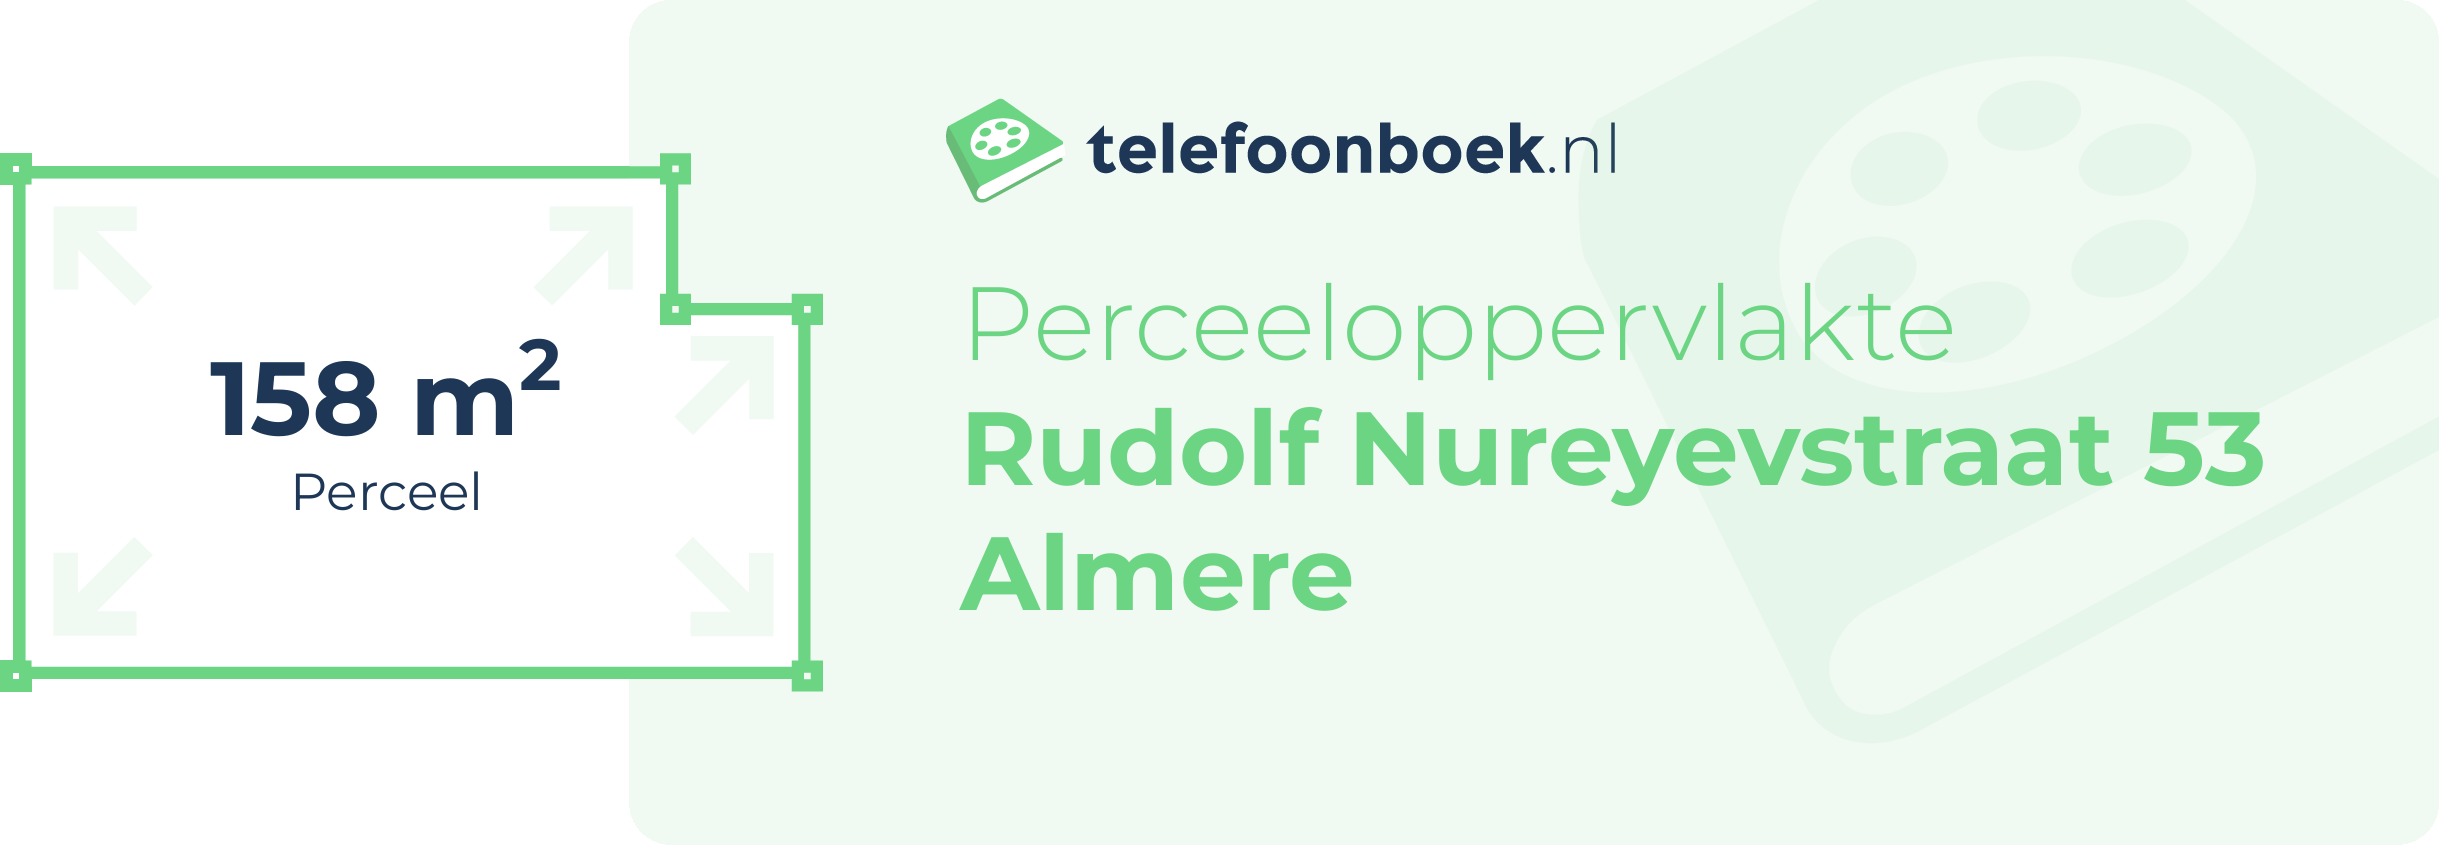 Perceeloppervlakte Rudolf Nureyevstraat 53 Almere